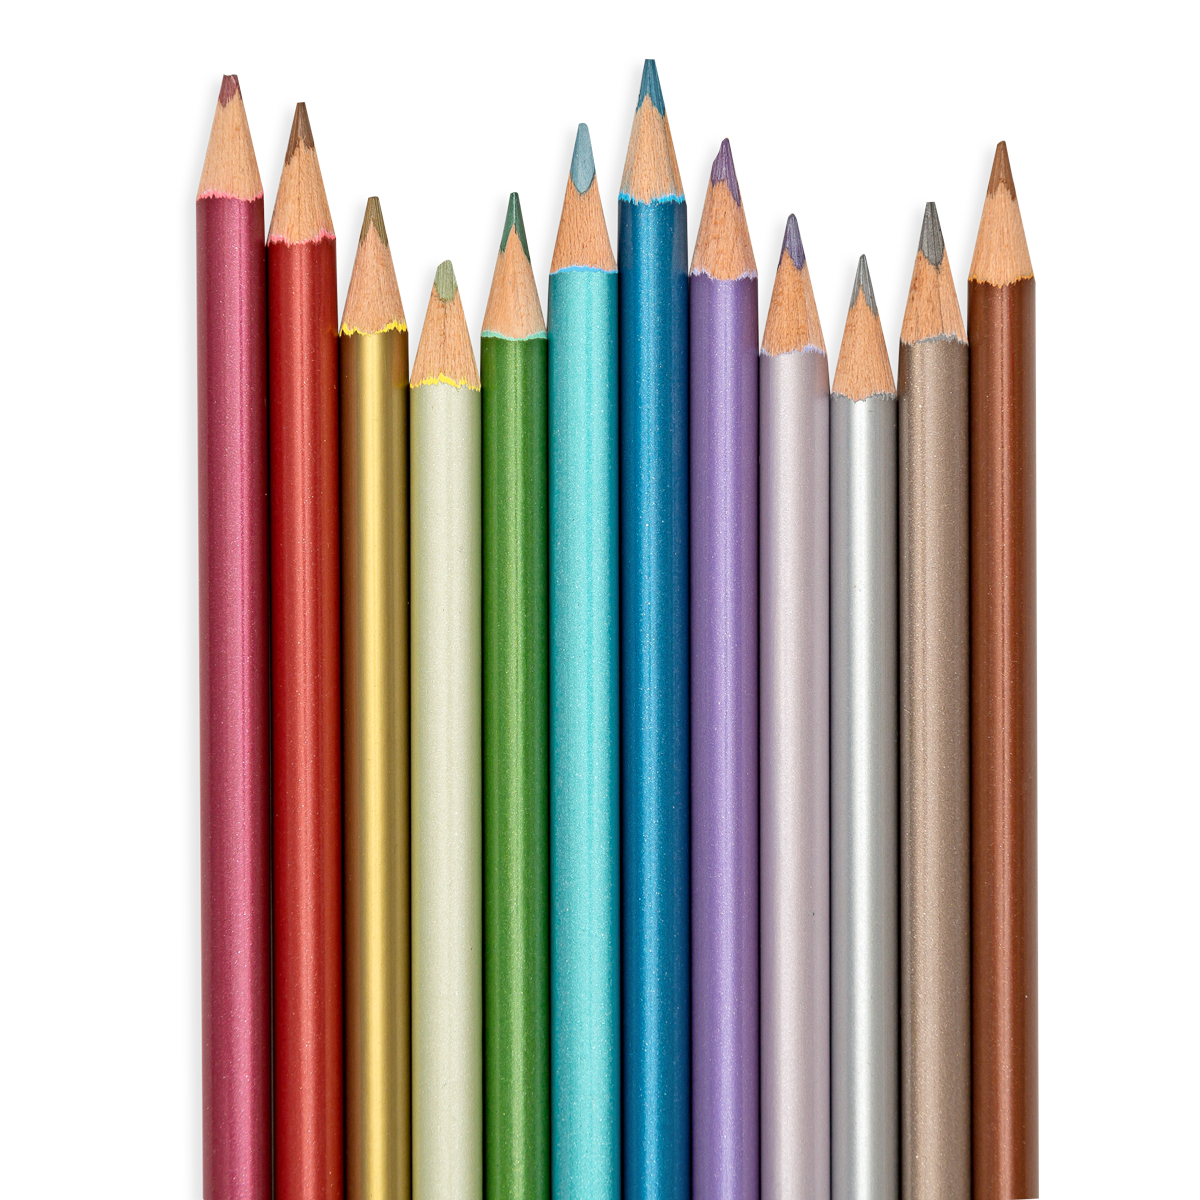 Modern Metallics Colored Pencils - Set of 12 - Toyrifix